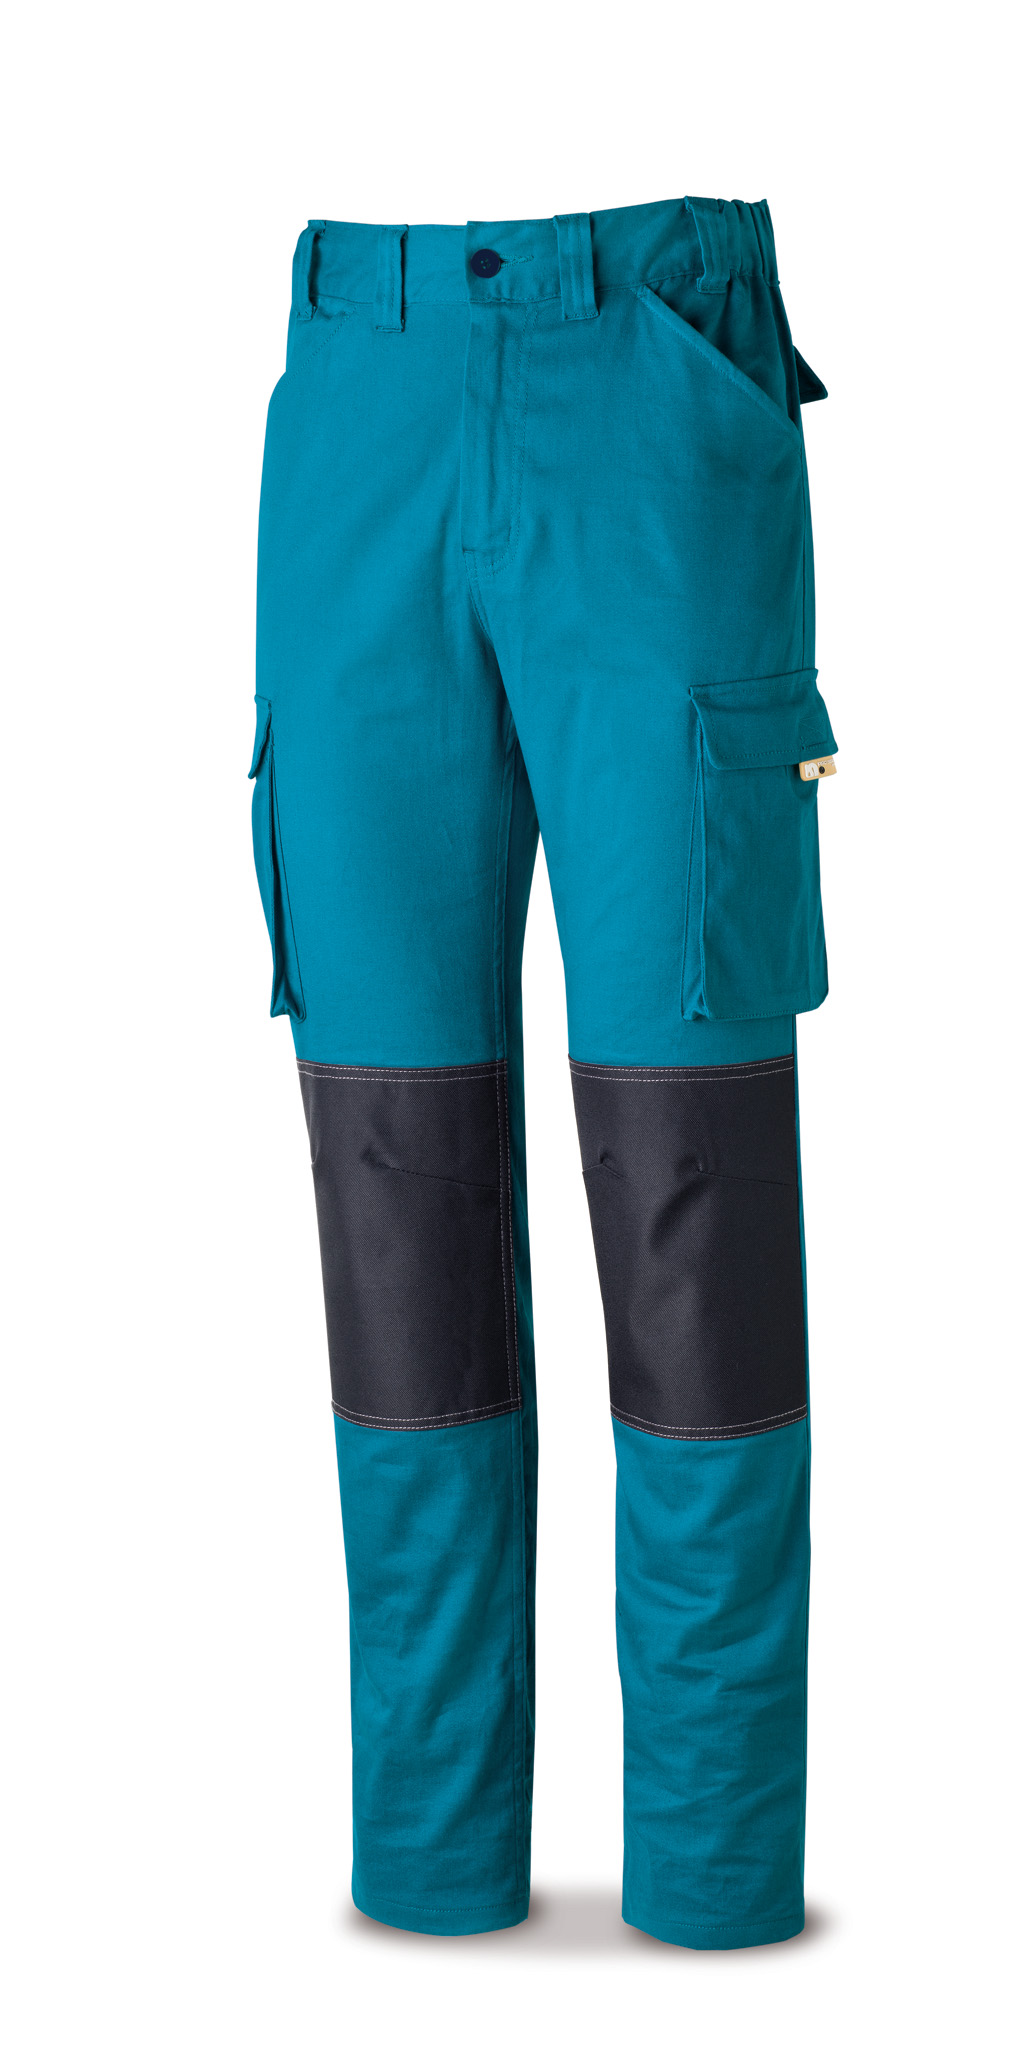 588-PSTRAE Workwear Pro Series ELASTIC cotton and elastene pants. Navy blue.